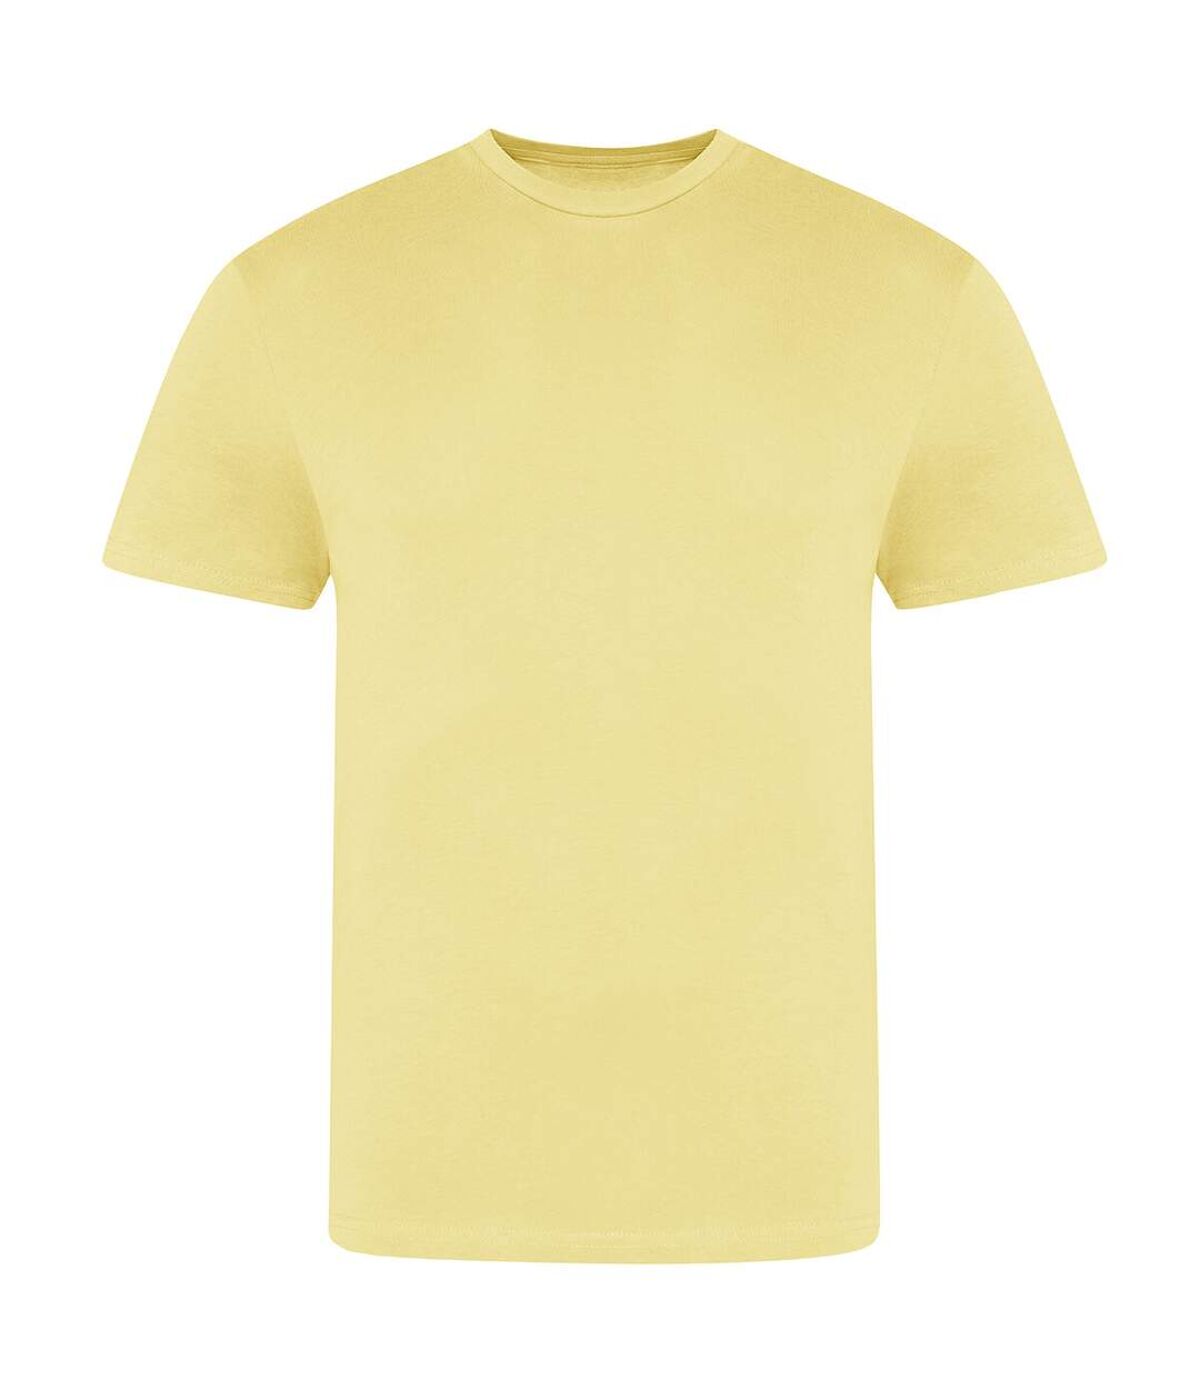 Awdis T-Shirt unisexe adulte The 100 (Sherbet Lemon) - UTRW7727